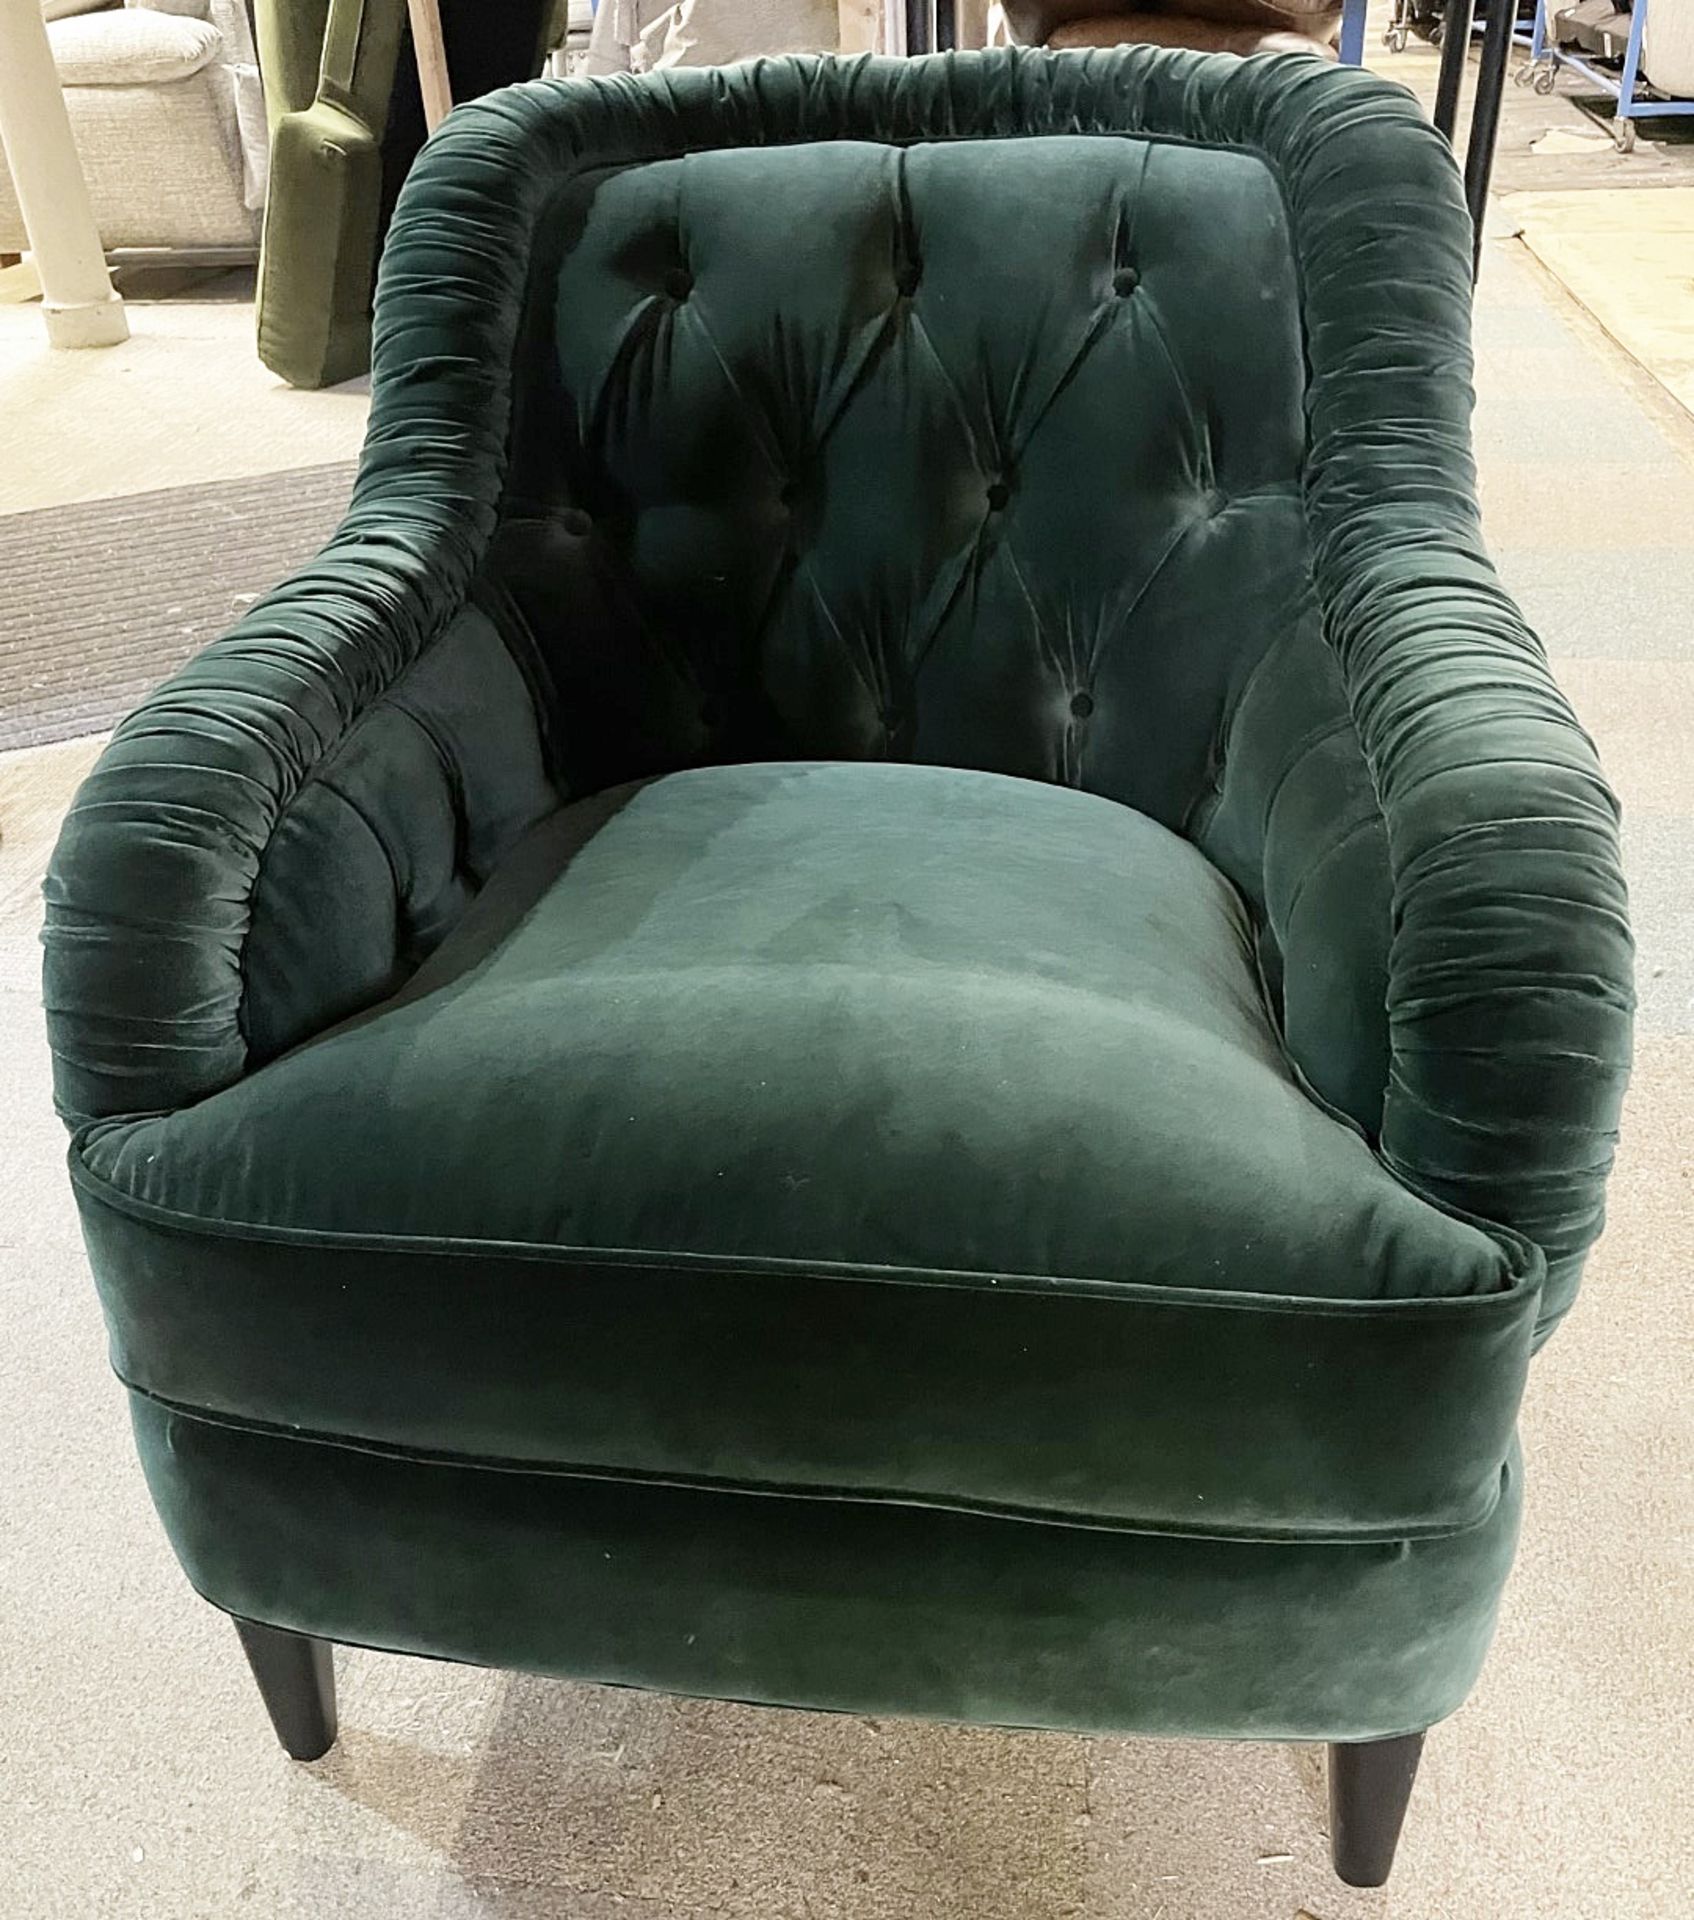 1 x Sumptuous Luxury Deep Green Velvet Upholstered Armchair - Original RRP £1,495 - Image 5 of 7